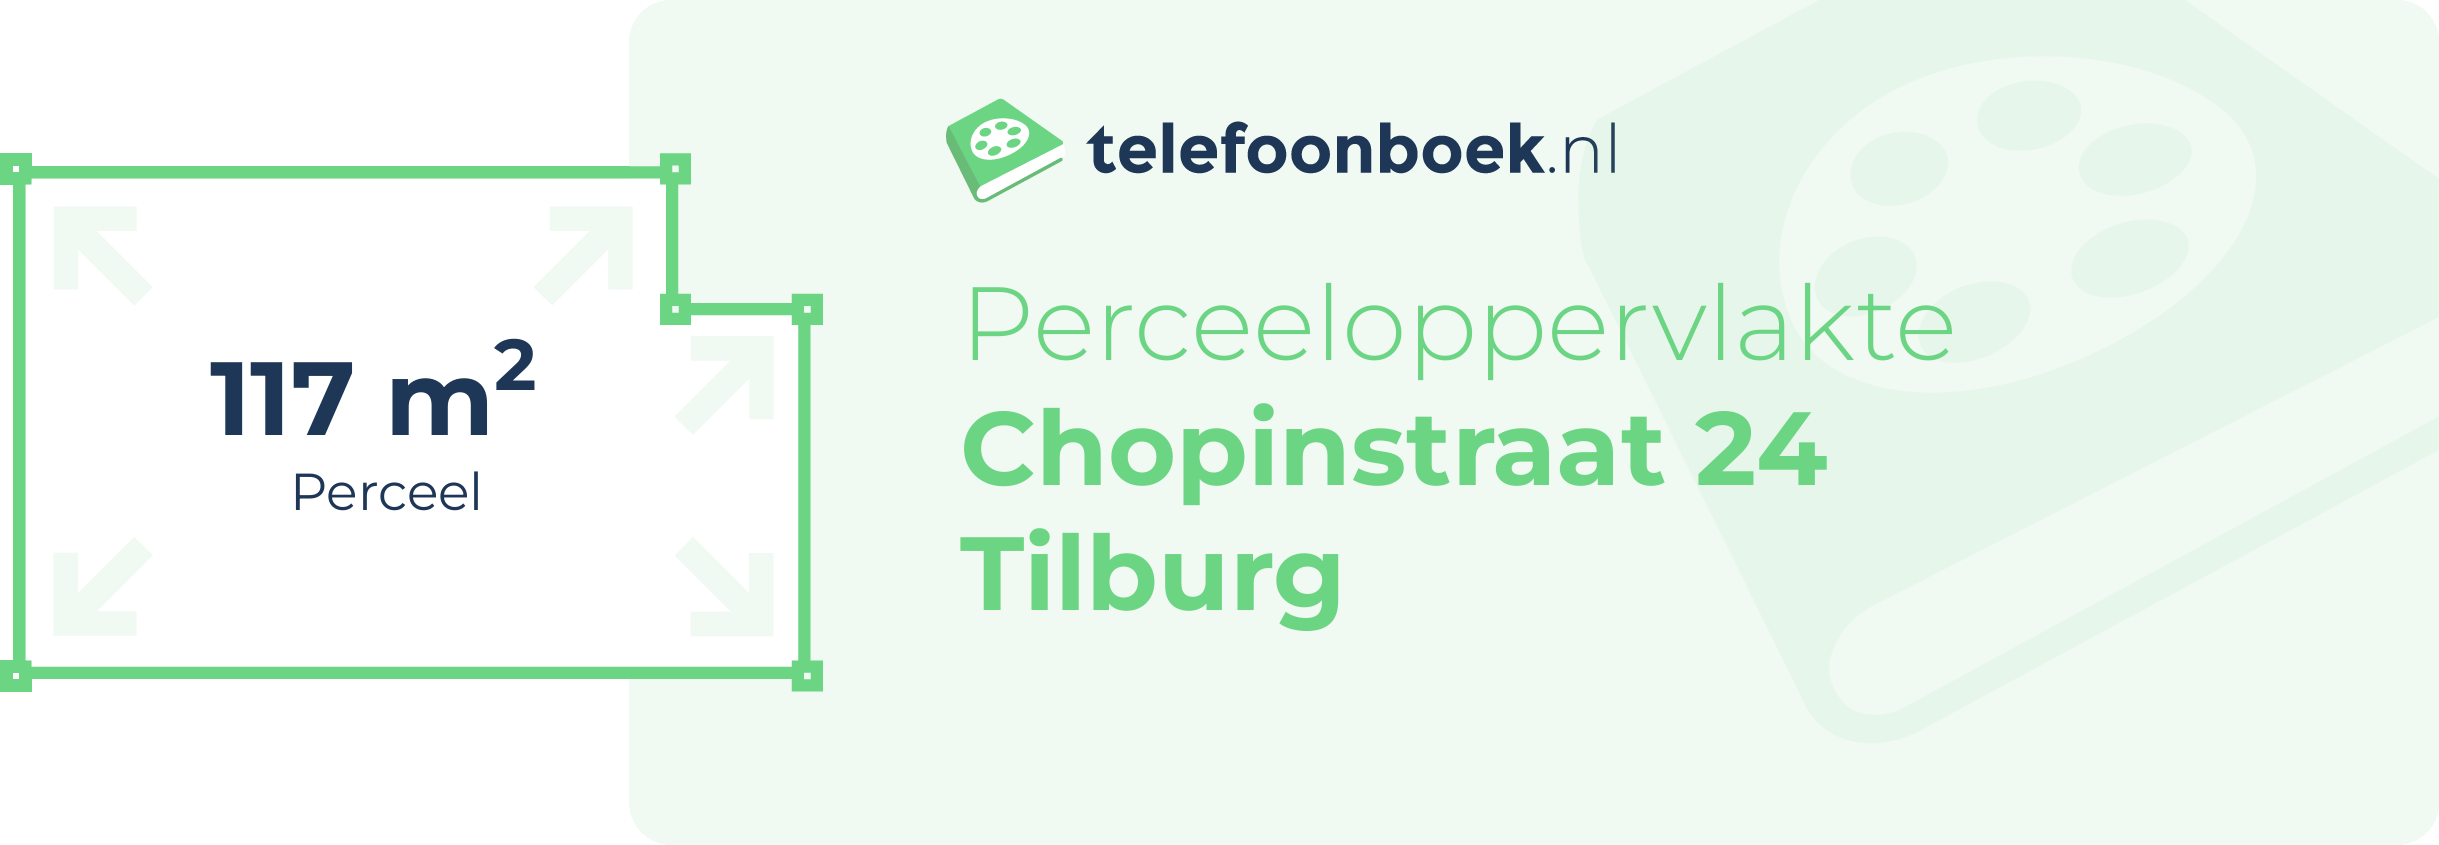 Perceeloppervlakte Chopinstraat 24 Tilburg